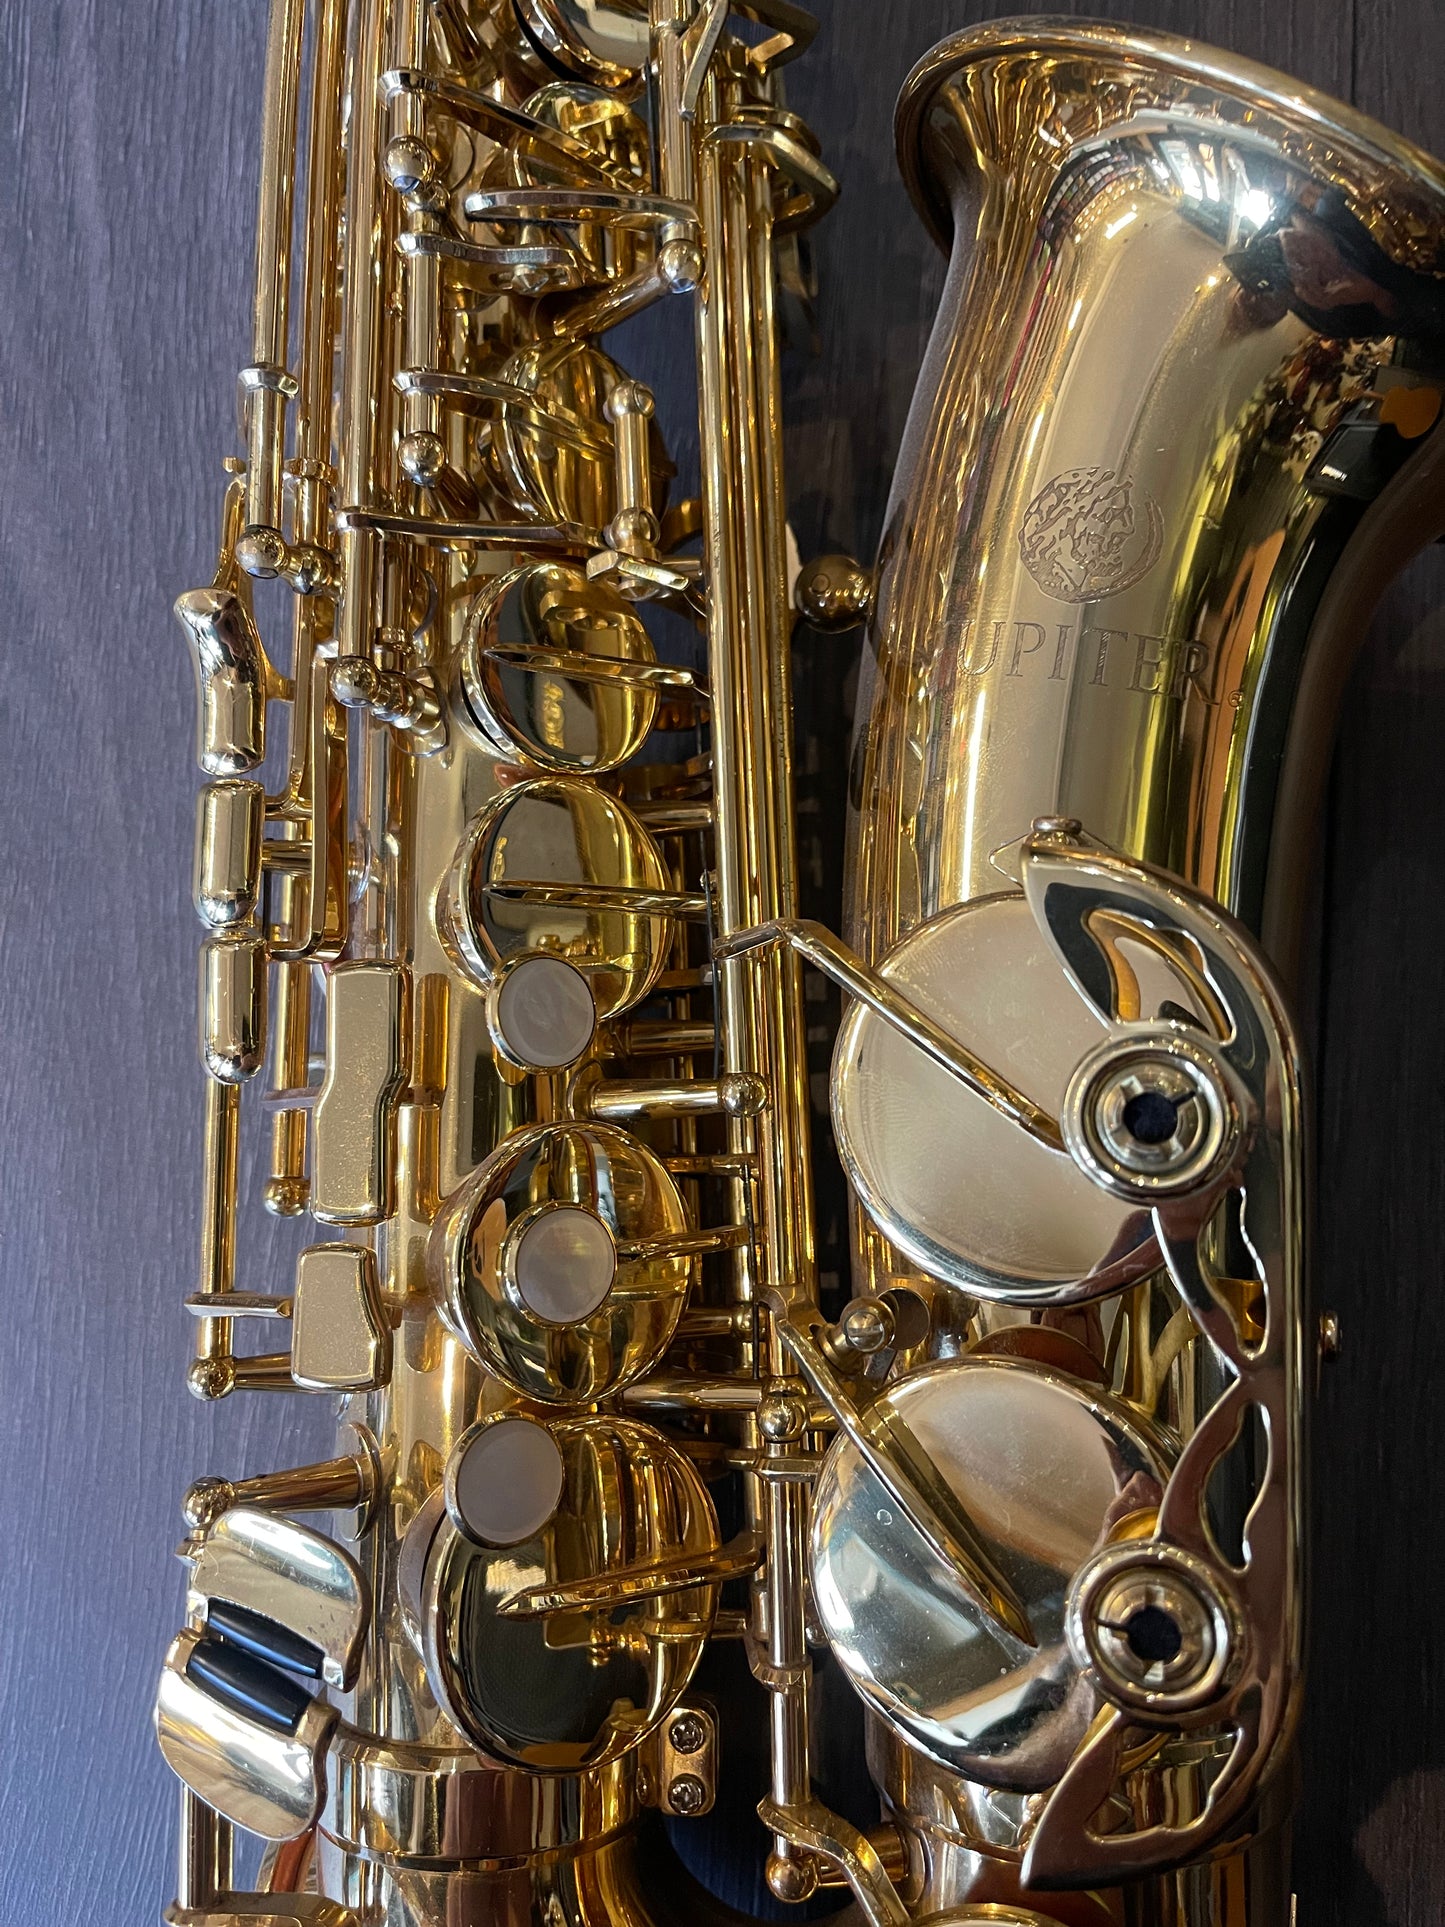 Jupiter JAS-1167 Alto Saxophone